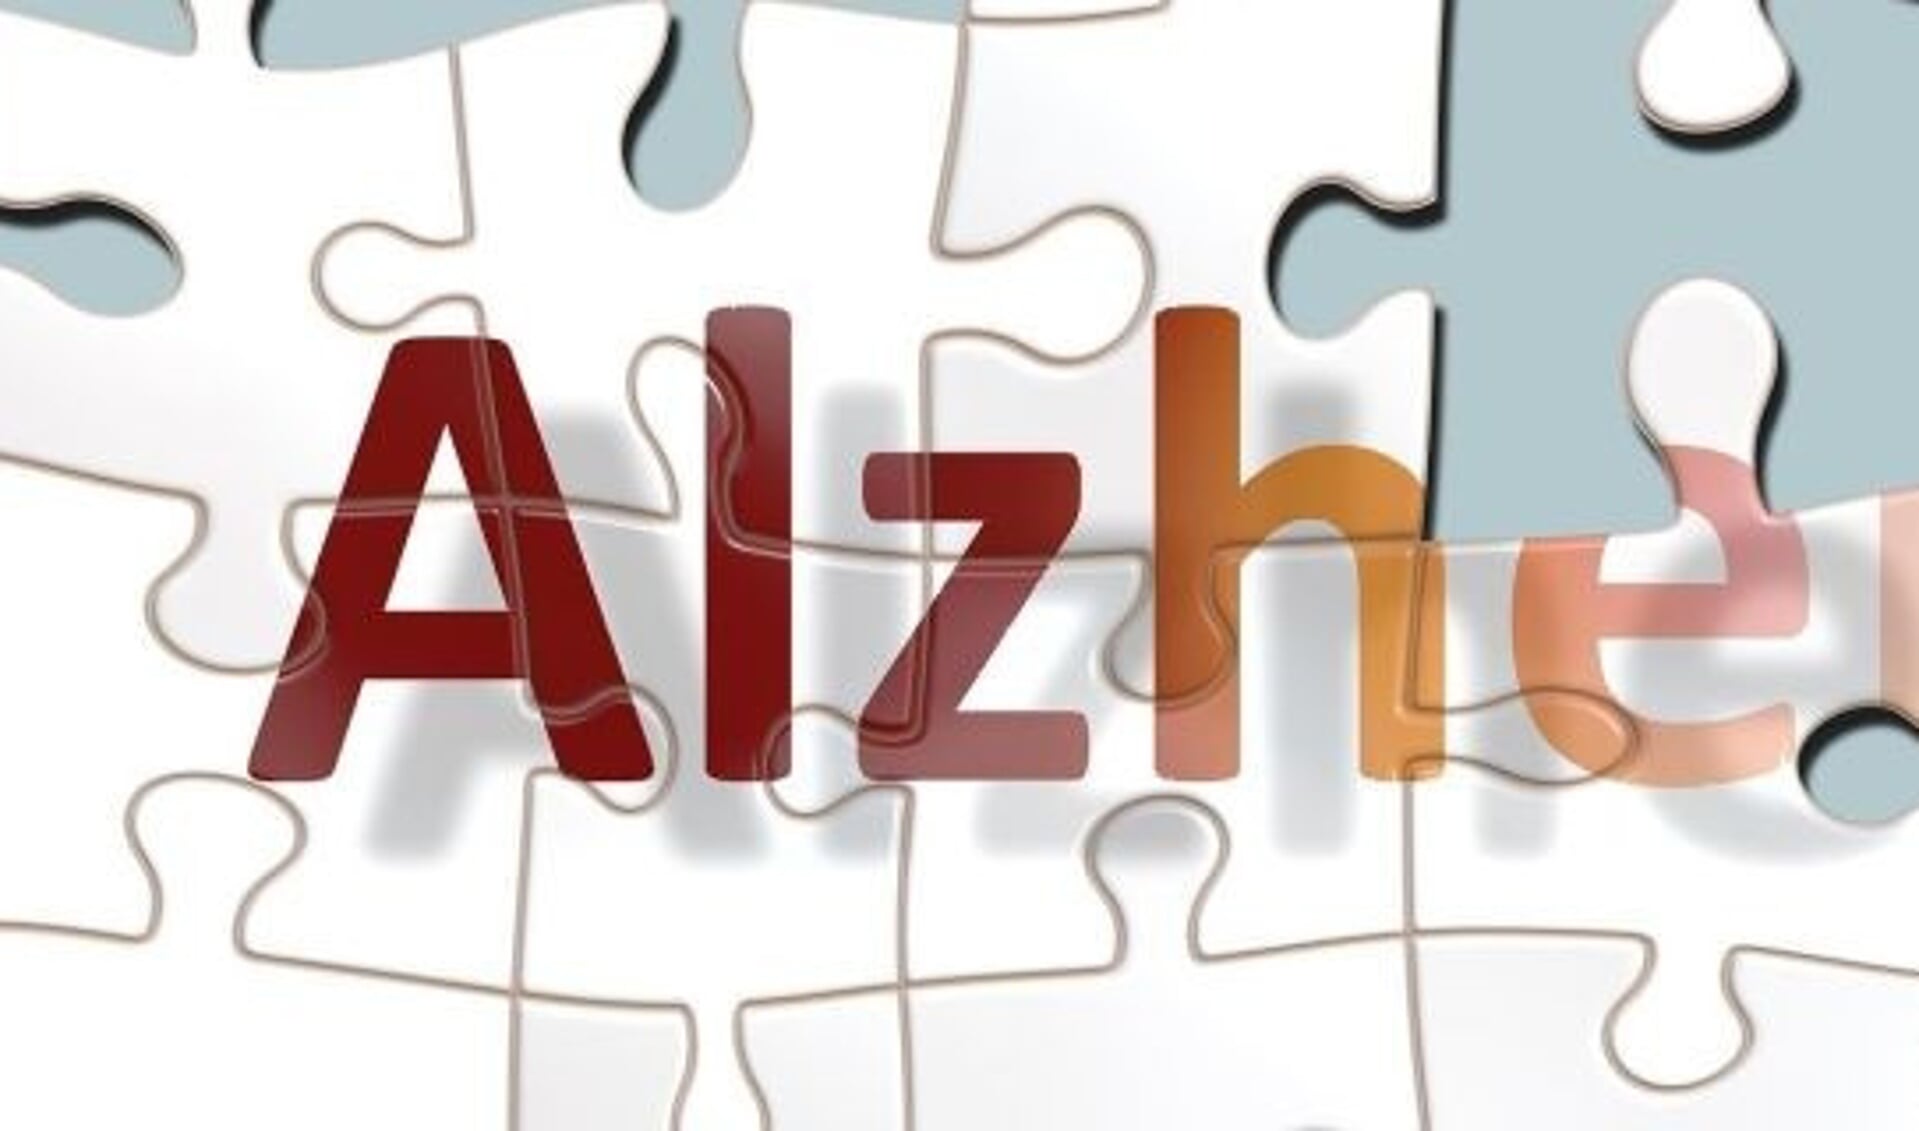 Alzheimercafé: Wat te regelen bij notaris en bank?